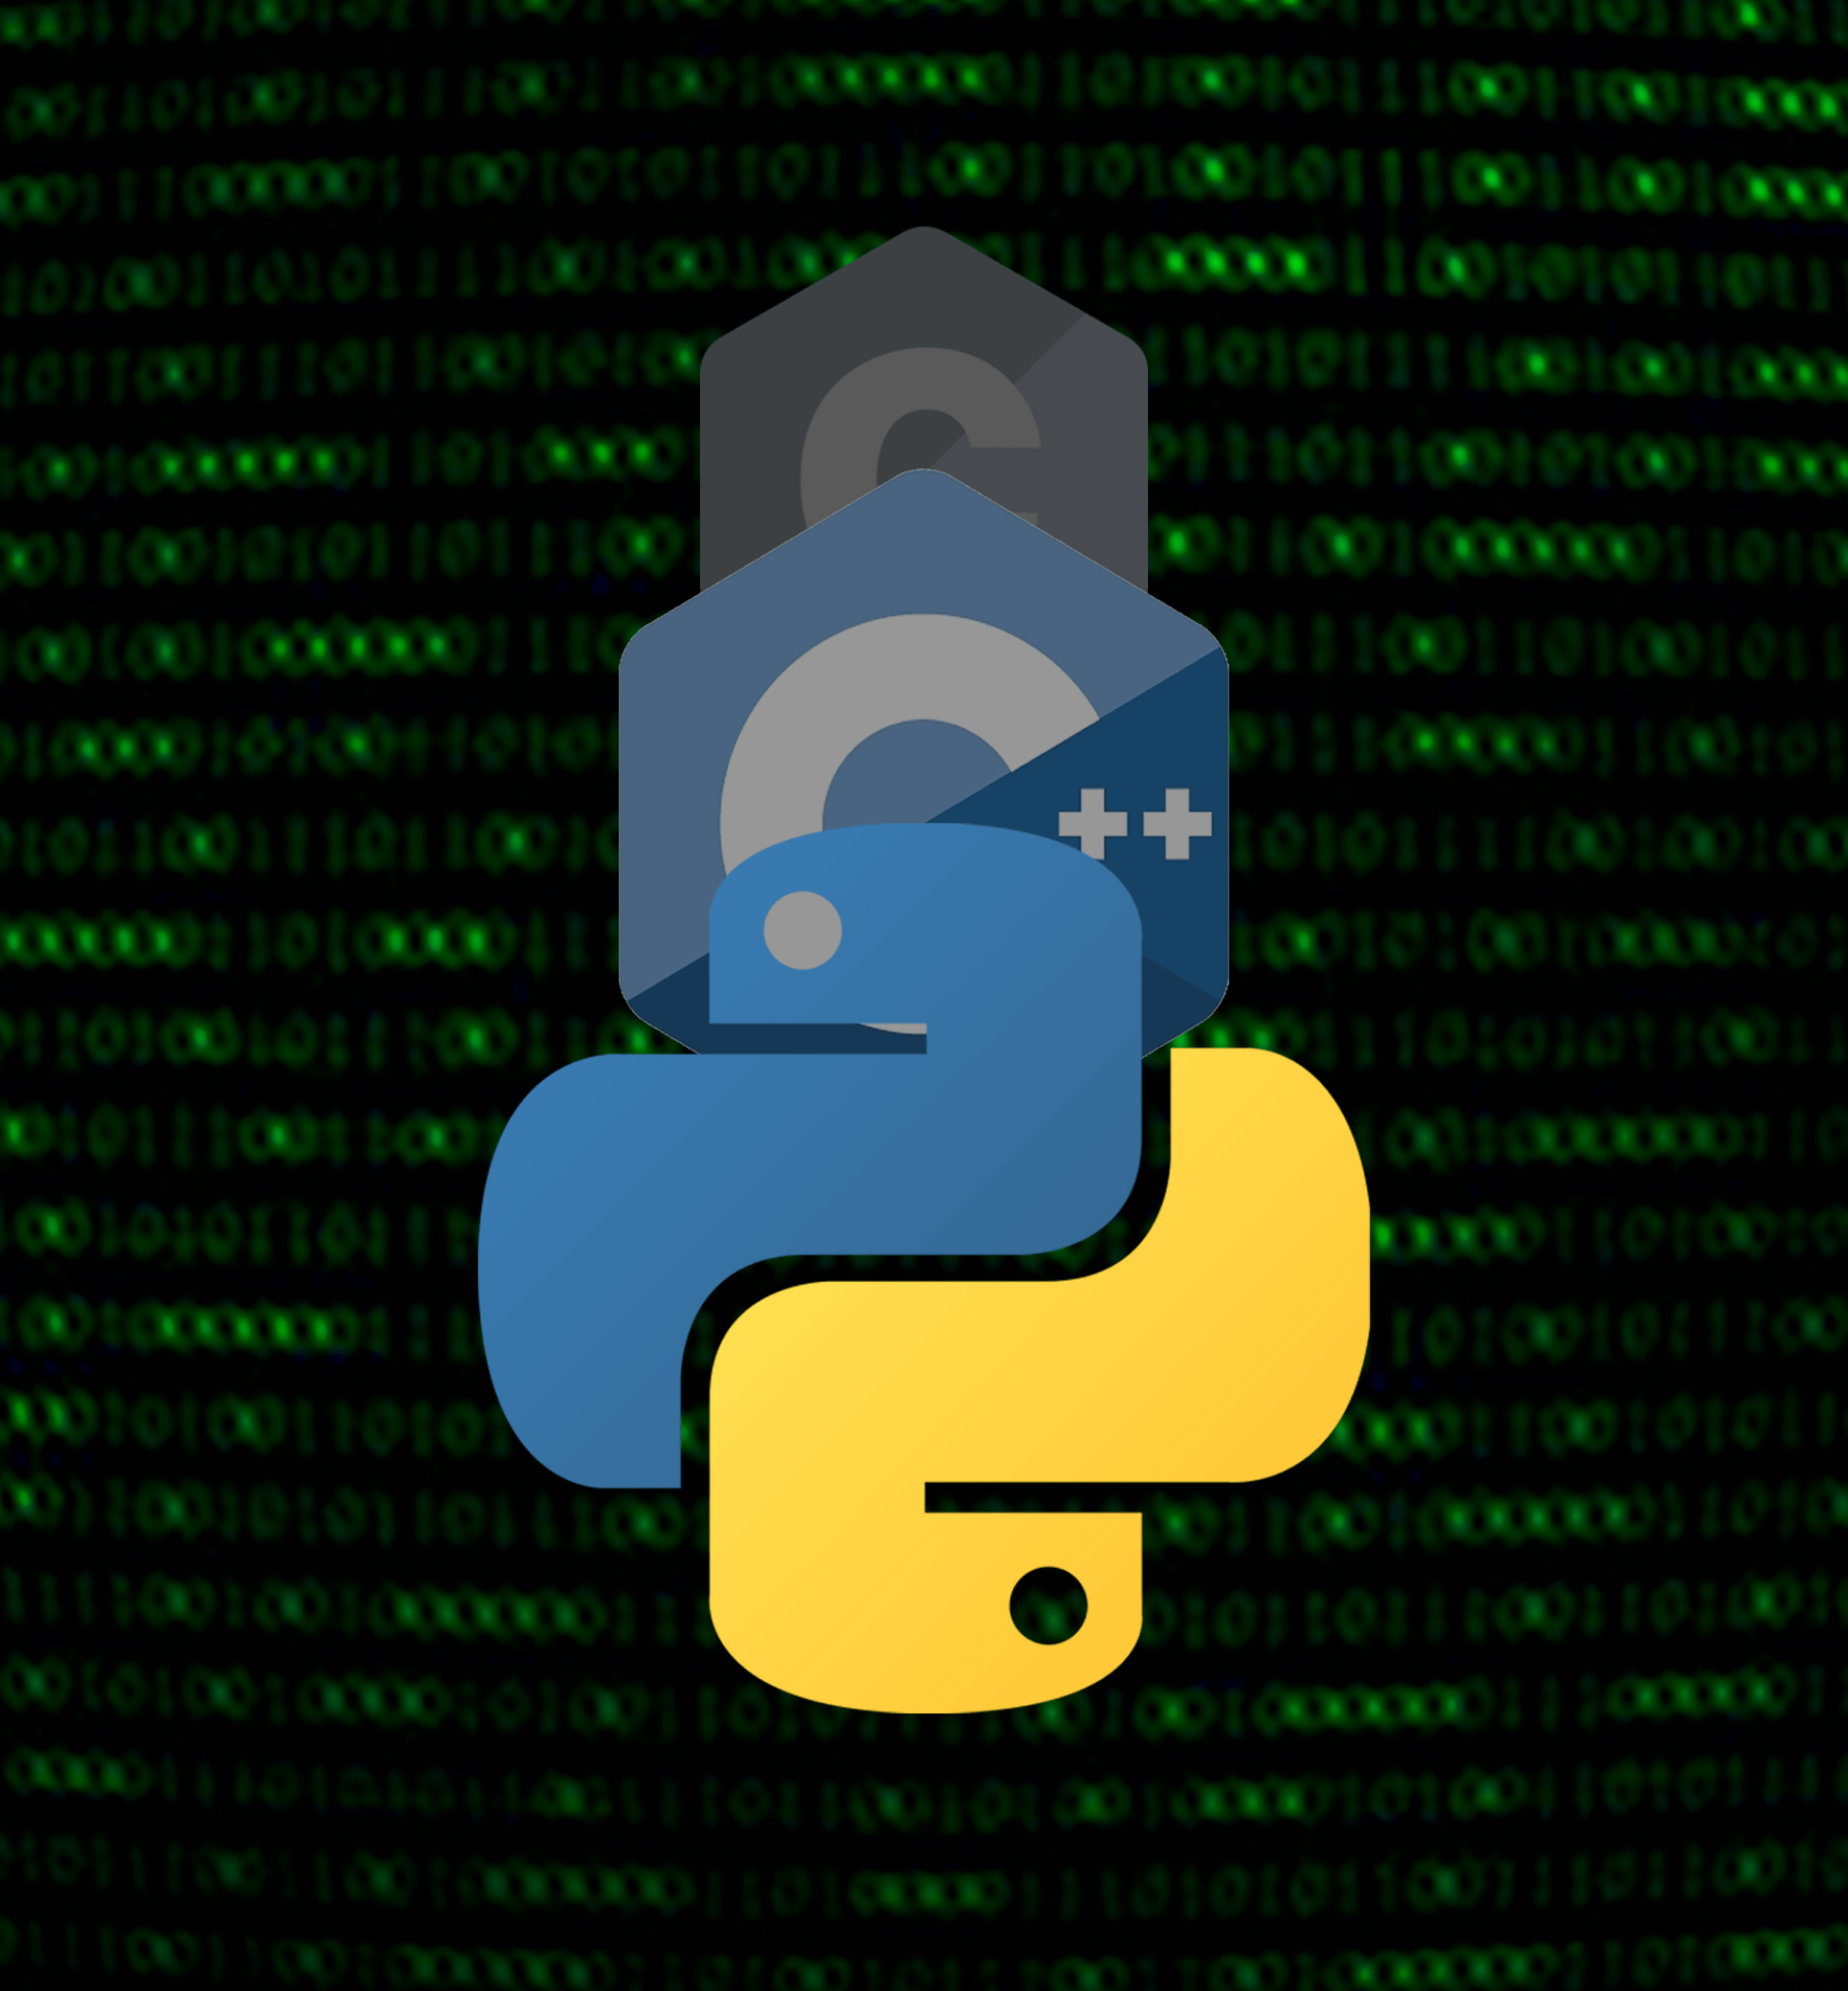 Программирование фон. Python фон. Python обои. Обои в стиле Python. Spacy python